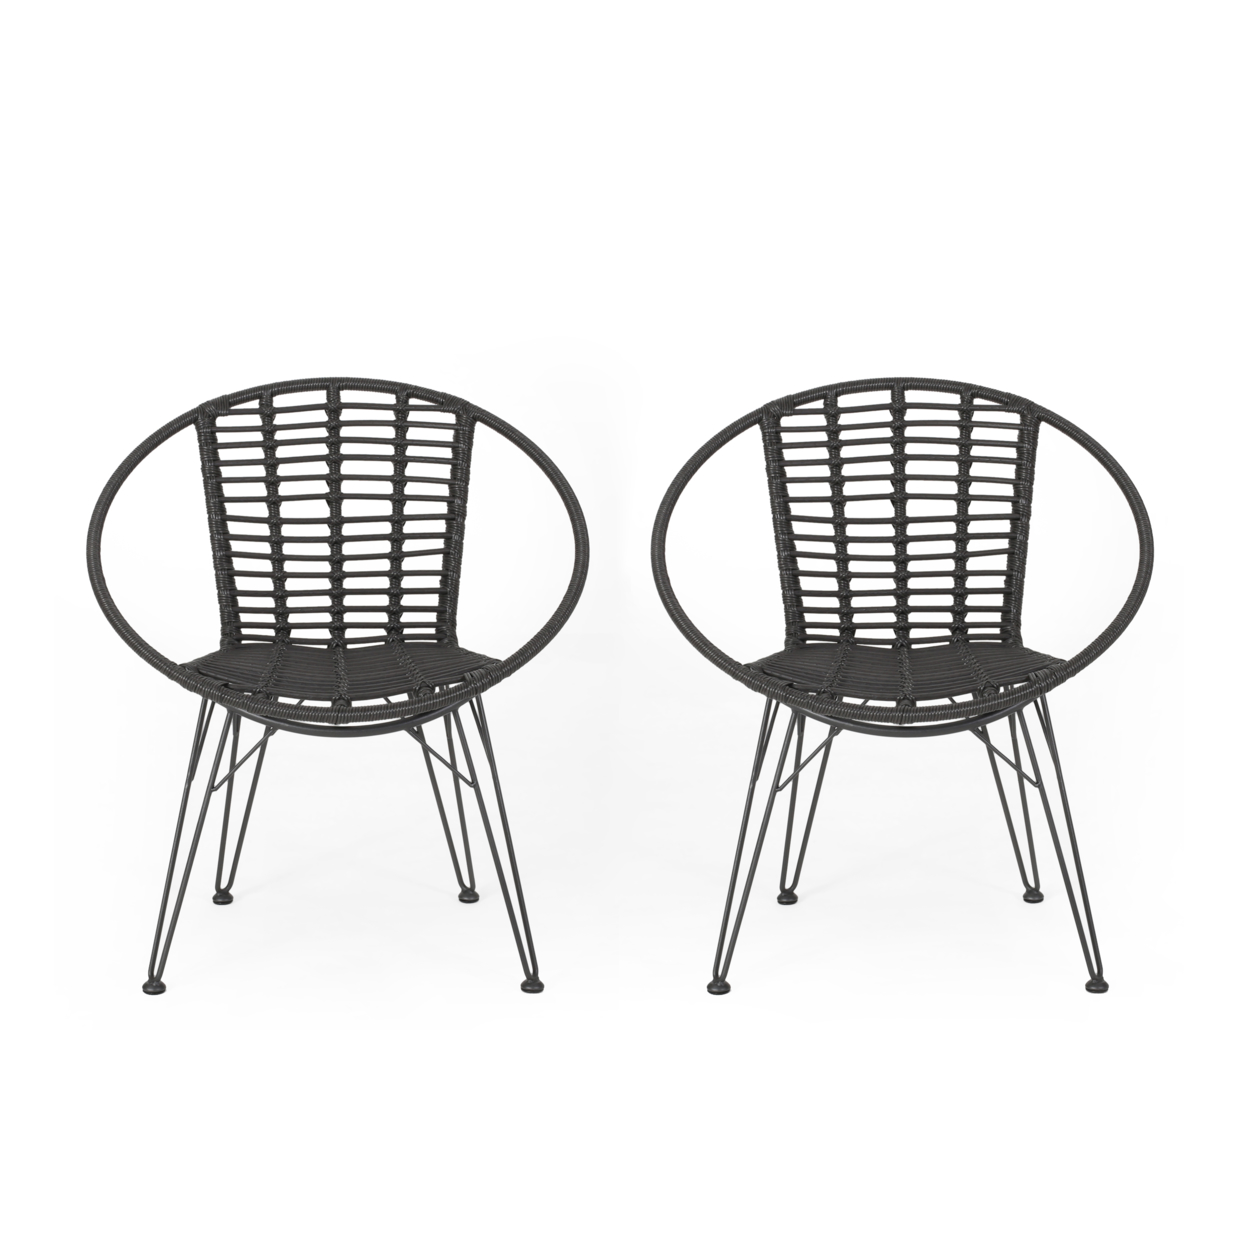 Winnie Outdoor Wicker Dining Chairs (Set Of 2) - Light Brown, Black